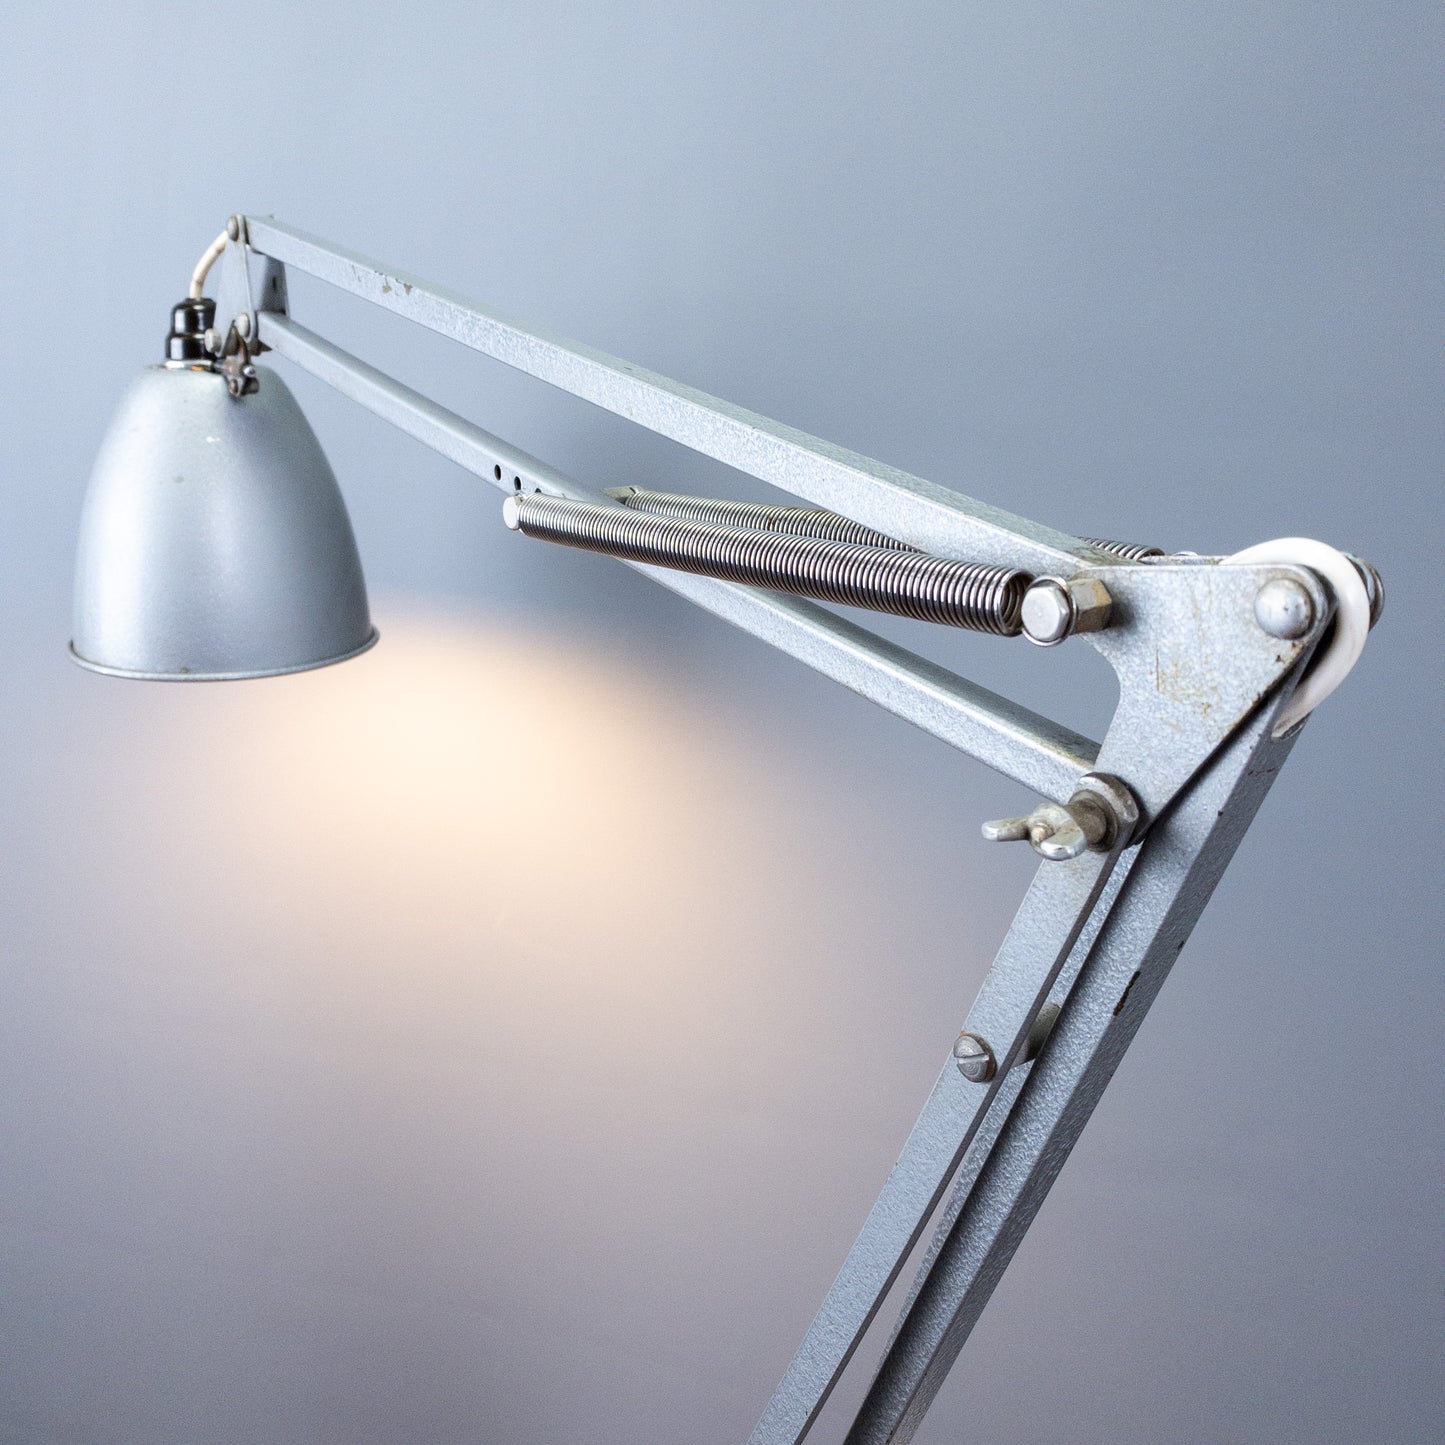 Very rare prototype Anglepoise lamp 1932 / 1933